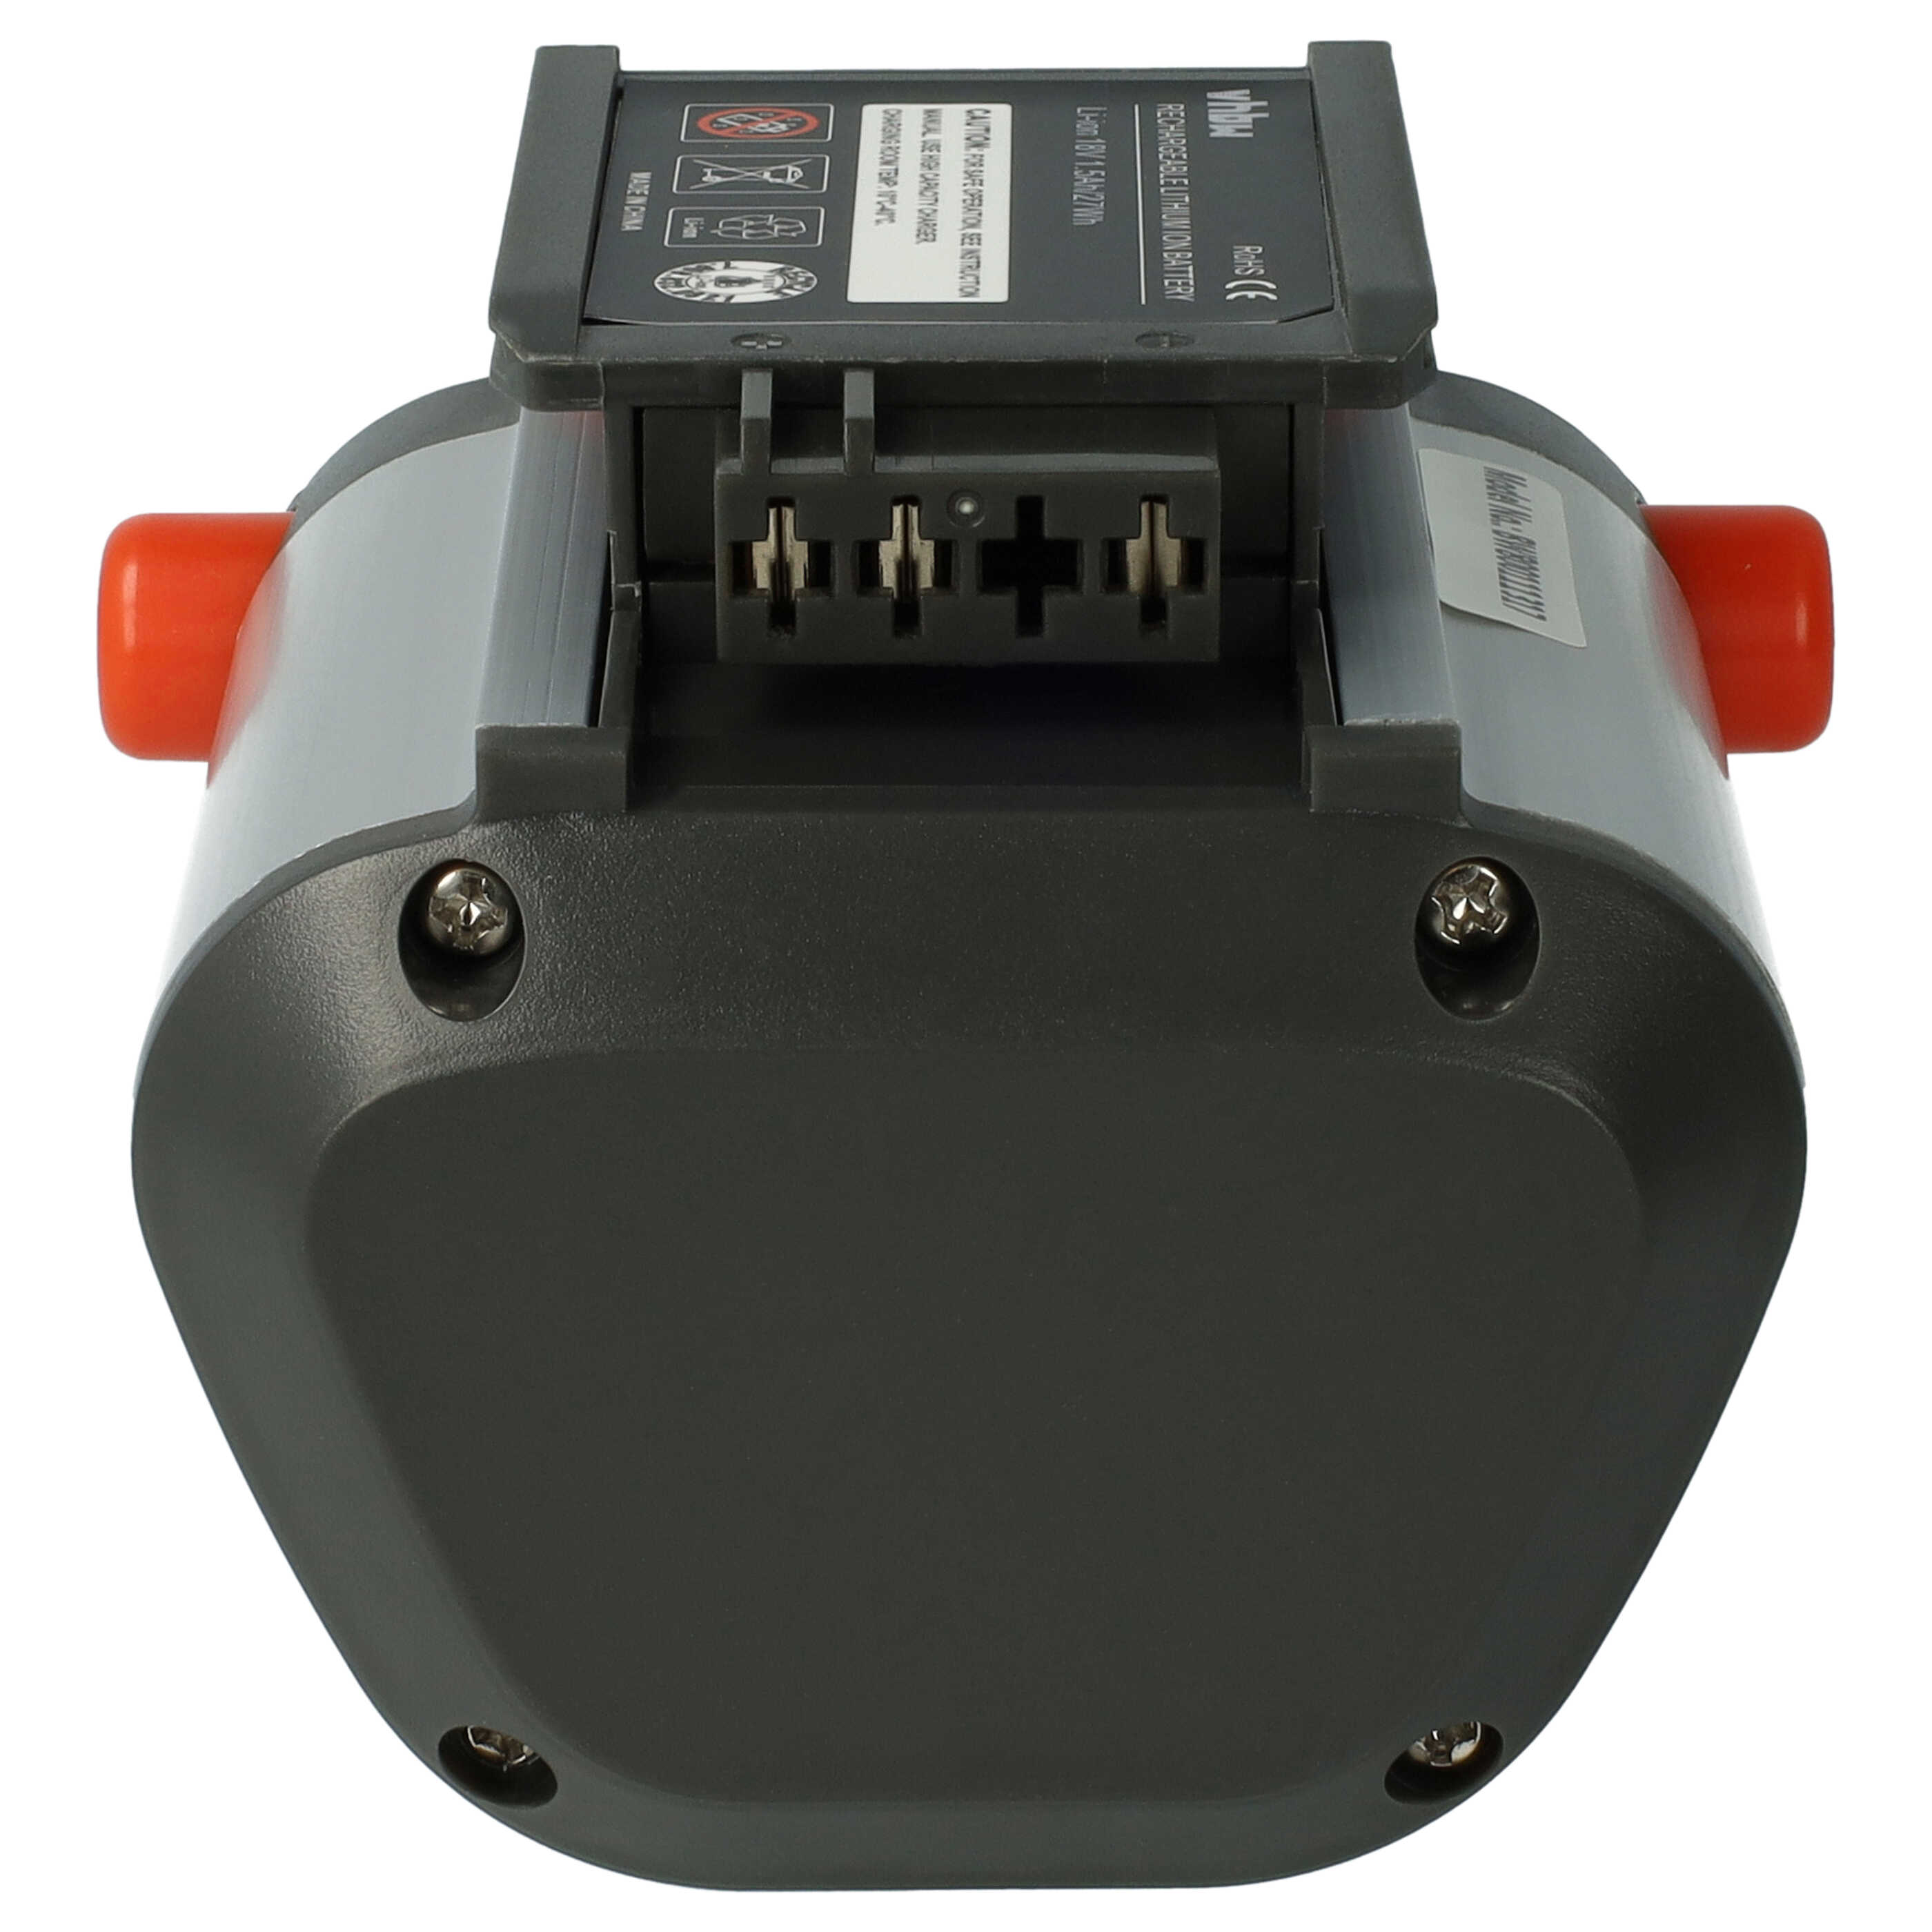 Lawnmower Replacement Battery for Gardena AccuJet Li-18, ComfortCut, EasyCut - 1500mAh 18V Li-Ion, black